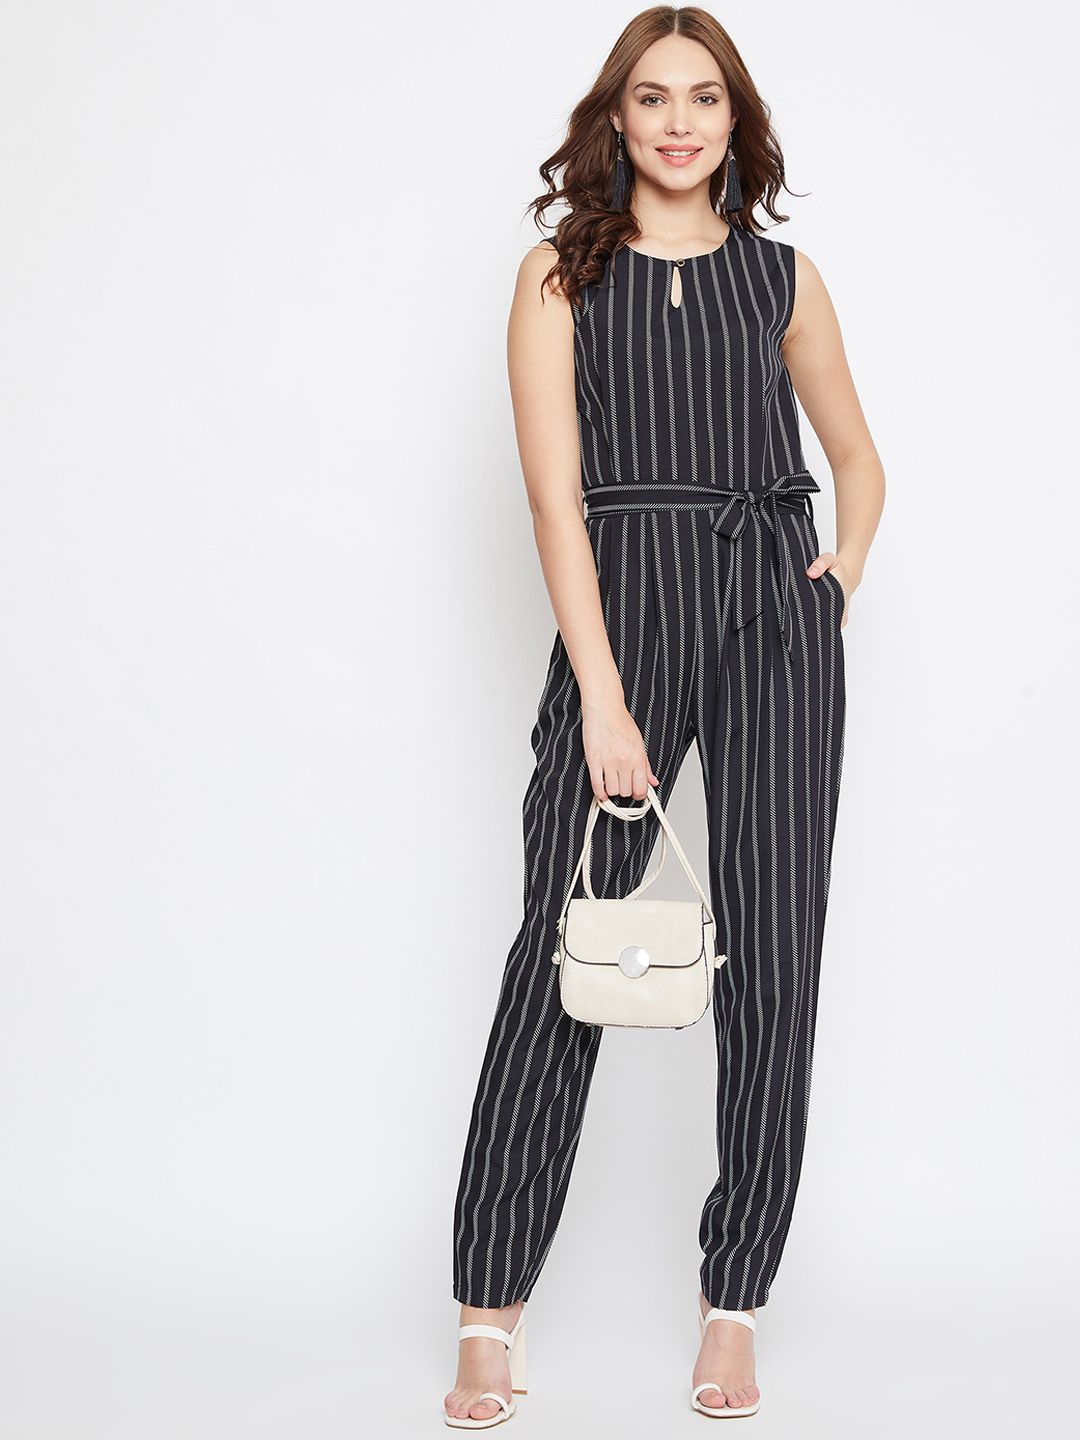 Uptownie Lite Women Black & White Striped Basic Jumpsuit Price in India